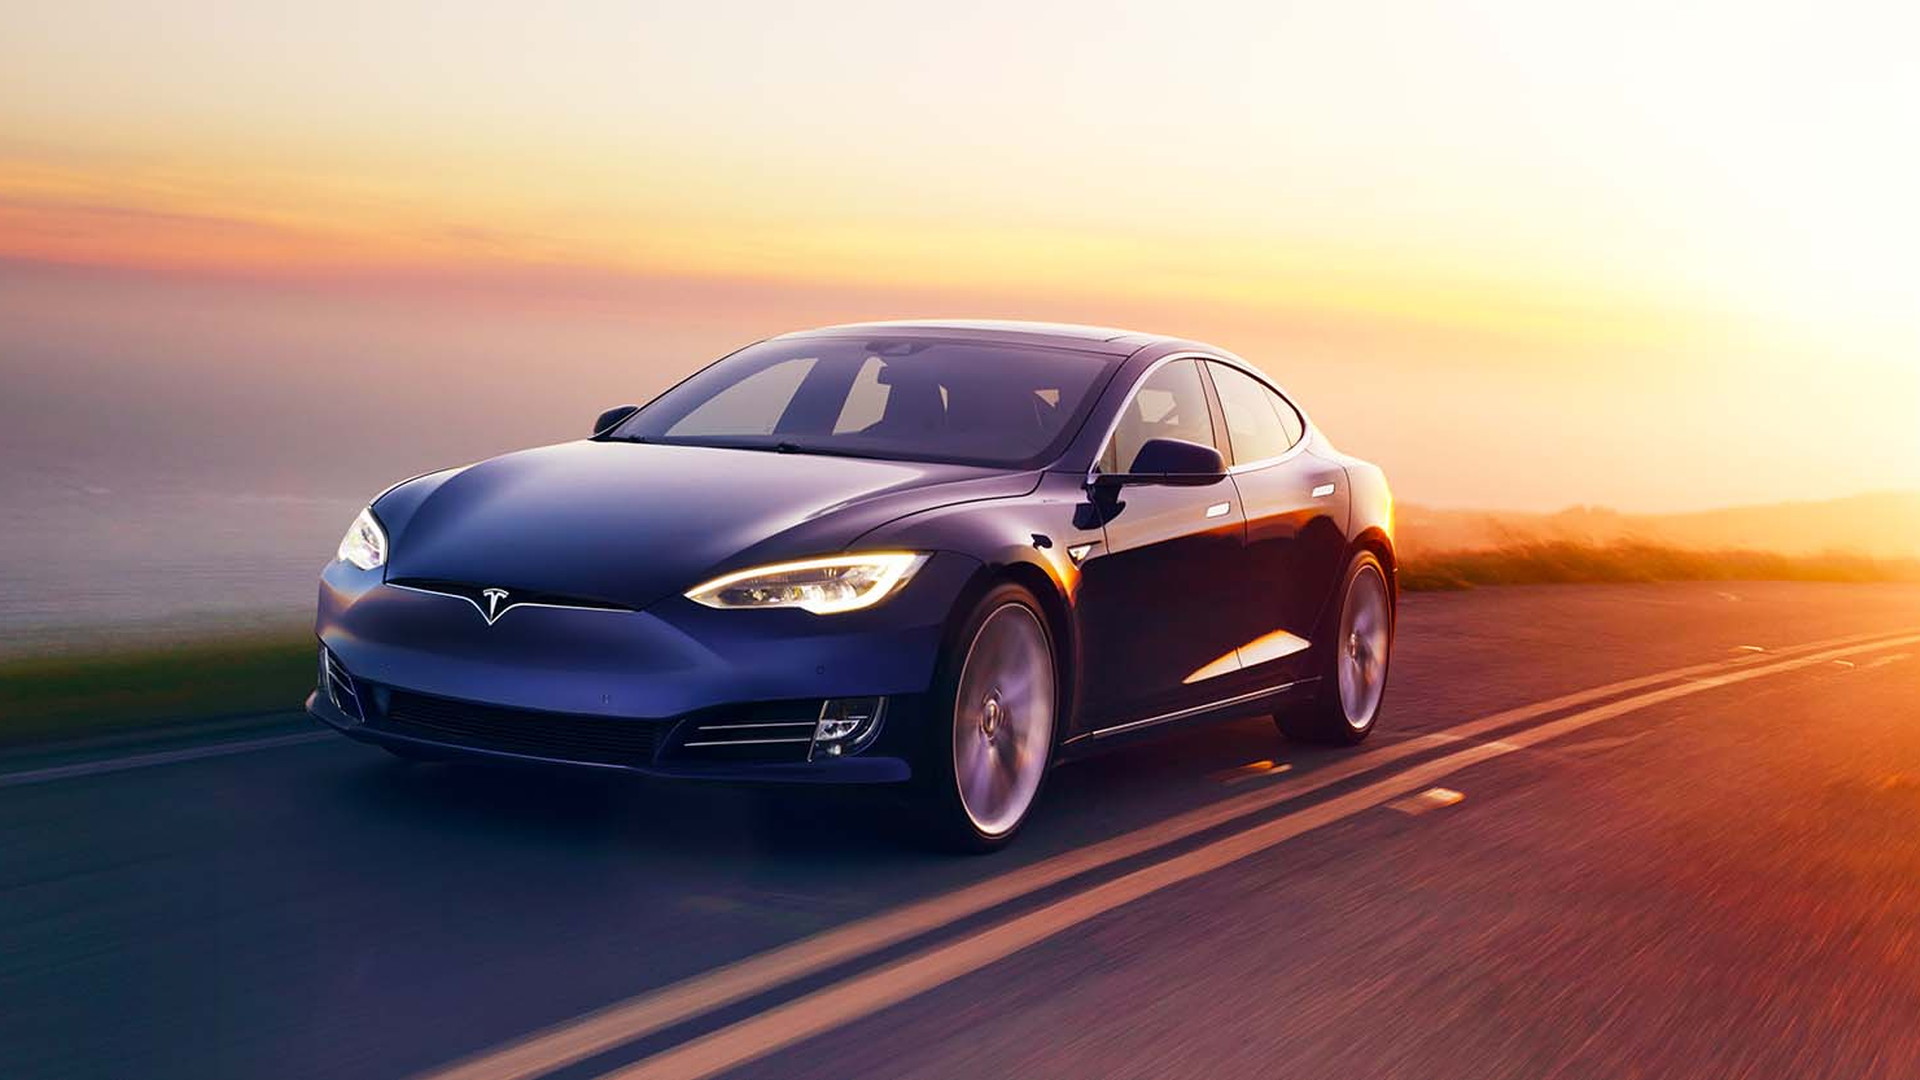 Tesla P100d Ludicrous Plus Mode Makes Electric Car Even Faster